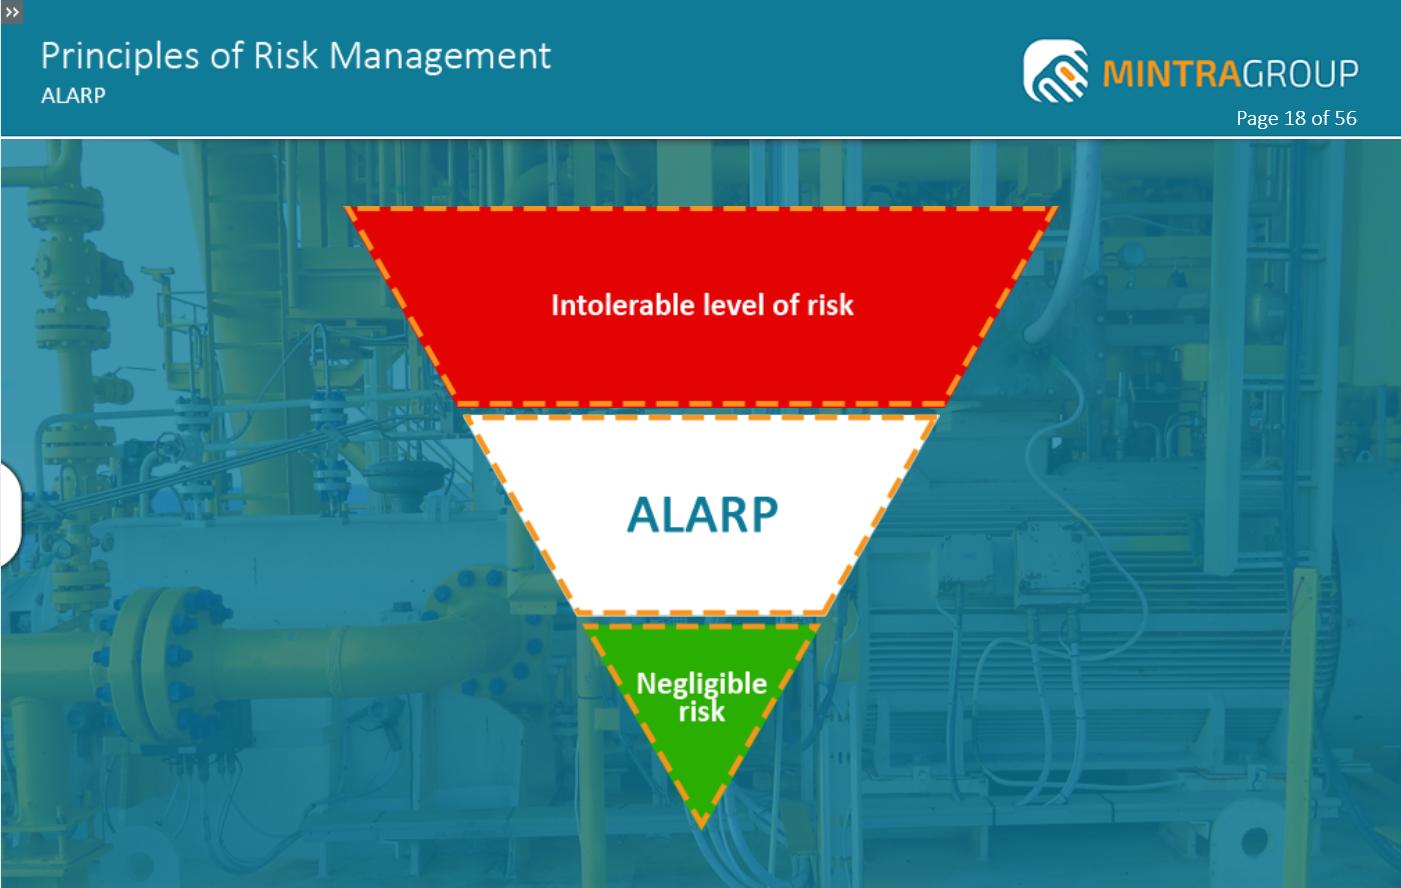 Principles of Risk Management Training